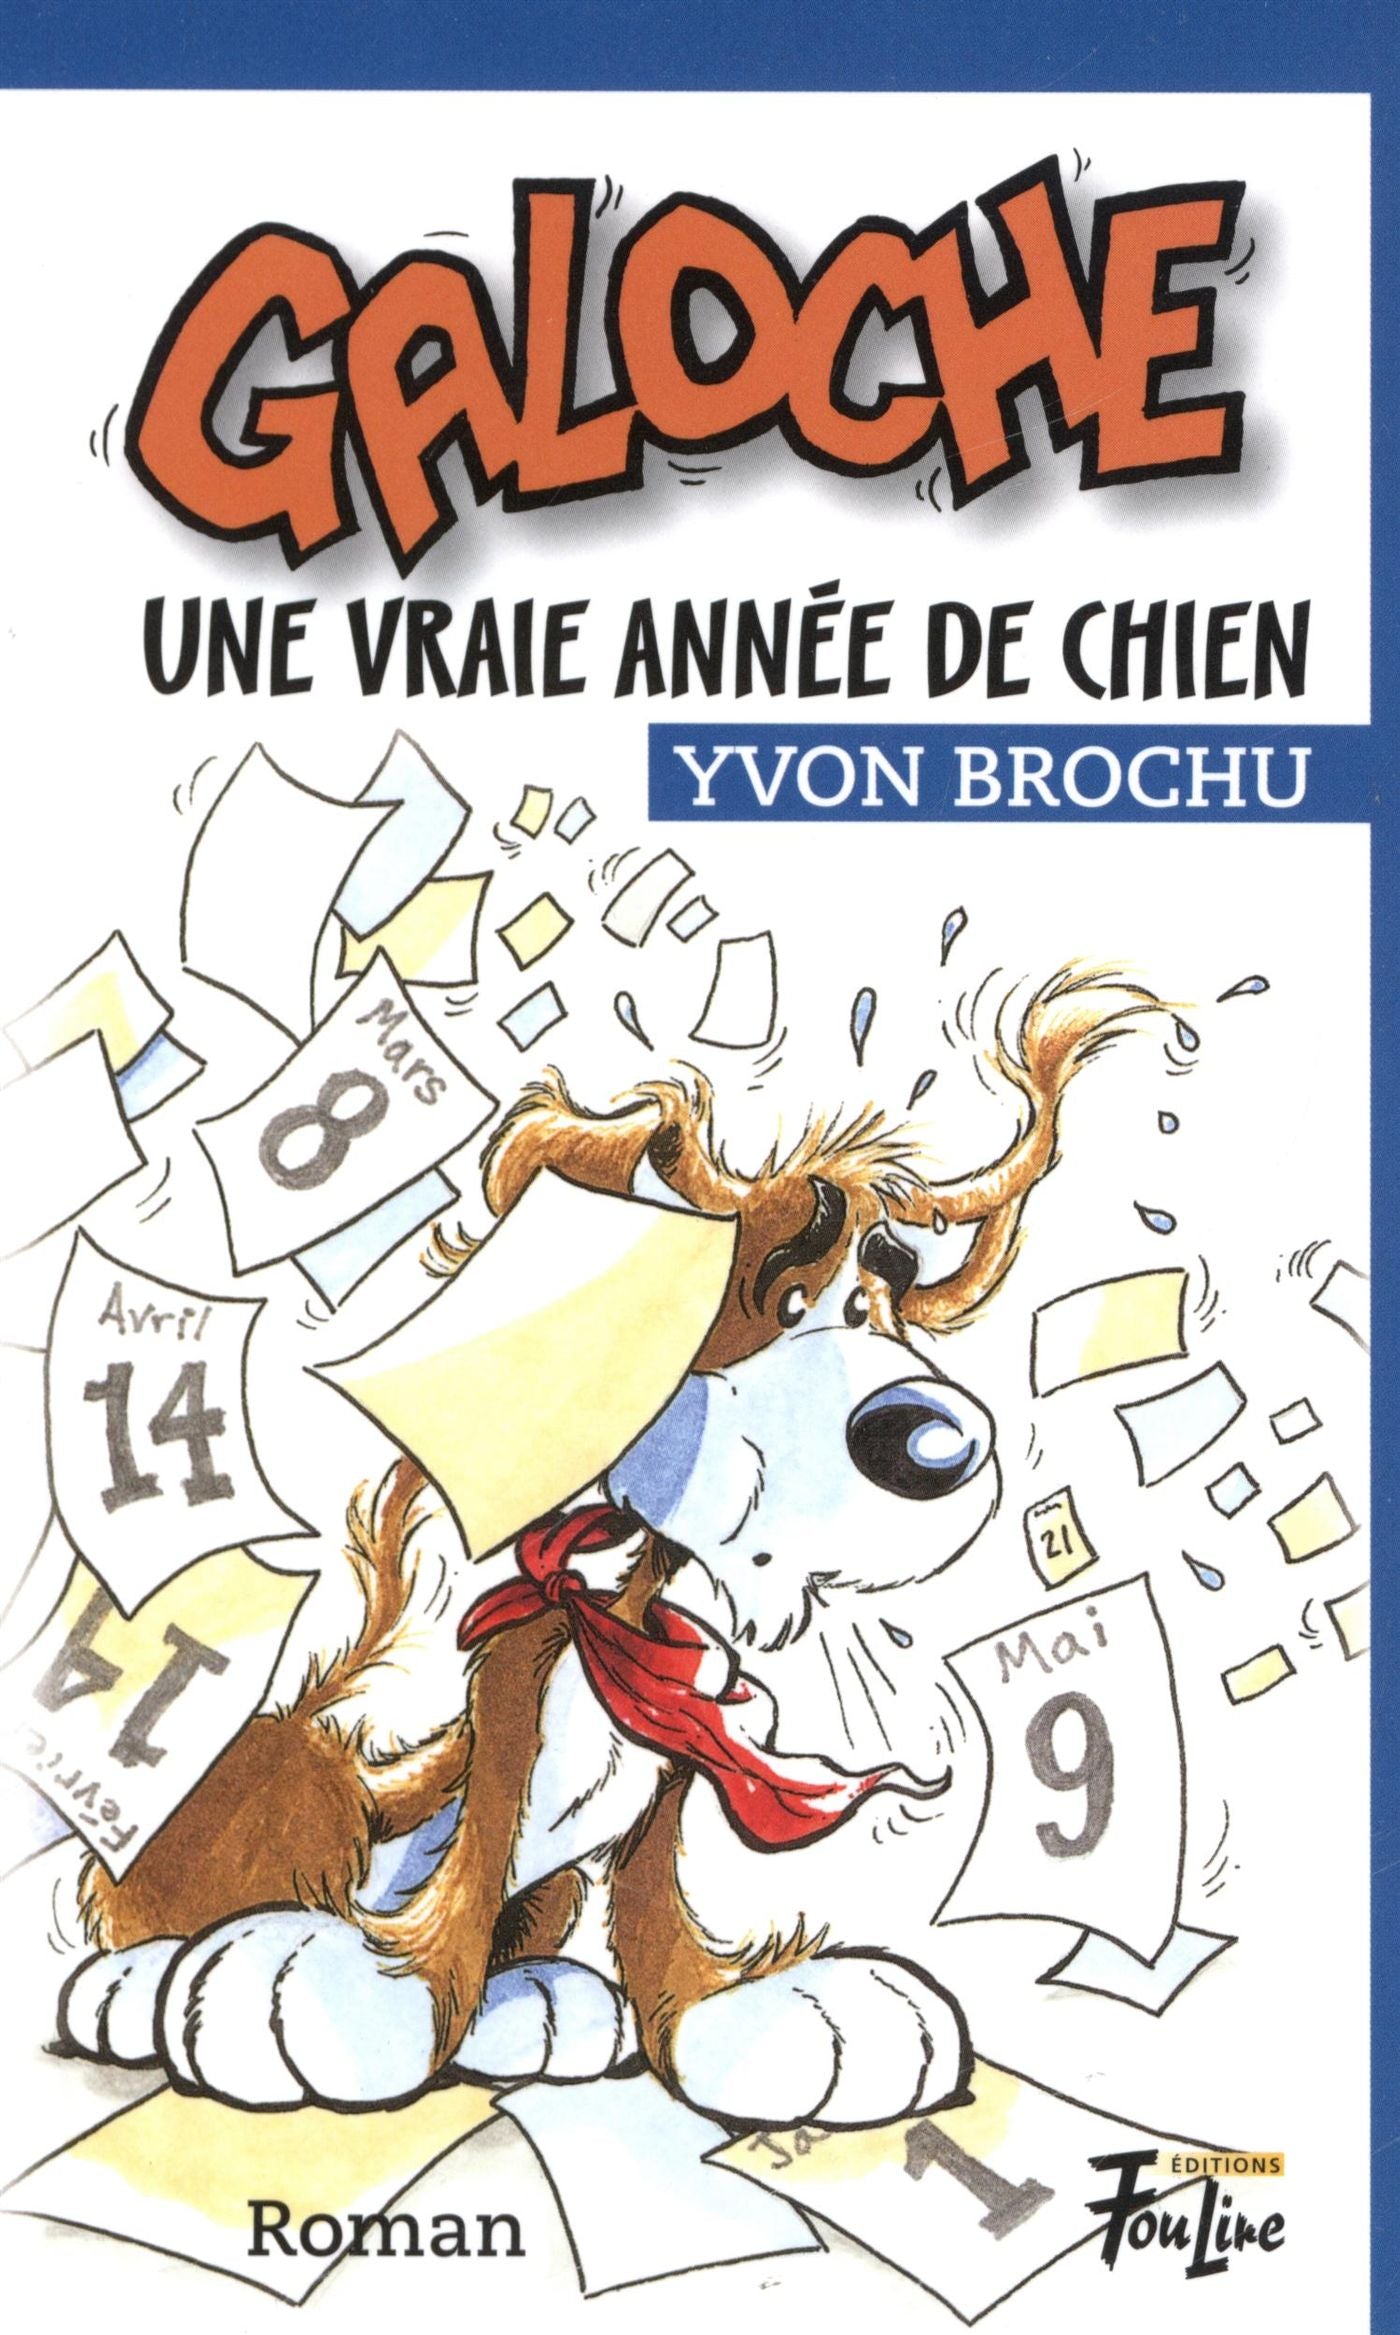 Galoche # 3 : Une vraie année de chien - Yvon Brochu